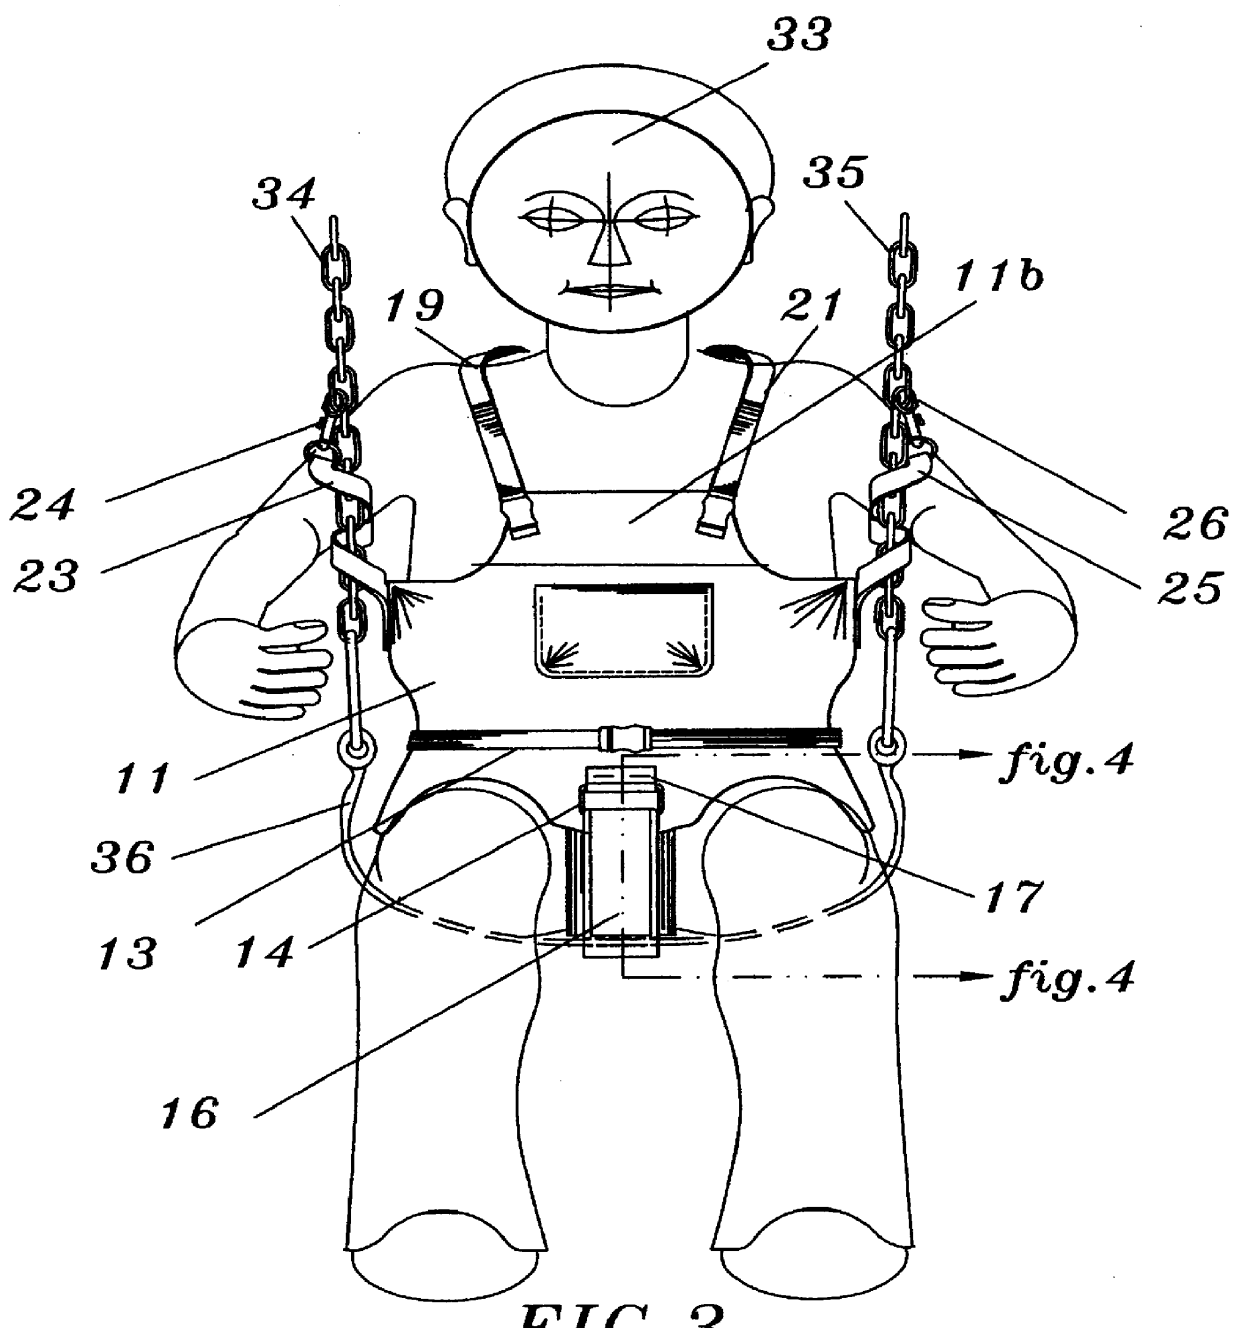 Multi-purpose child safety harness